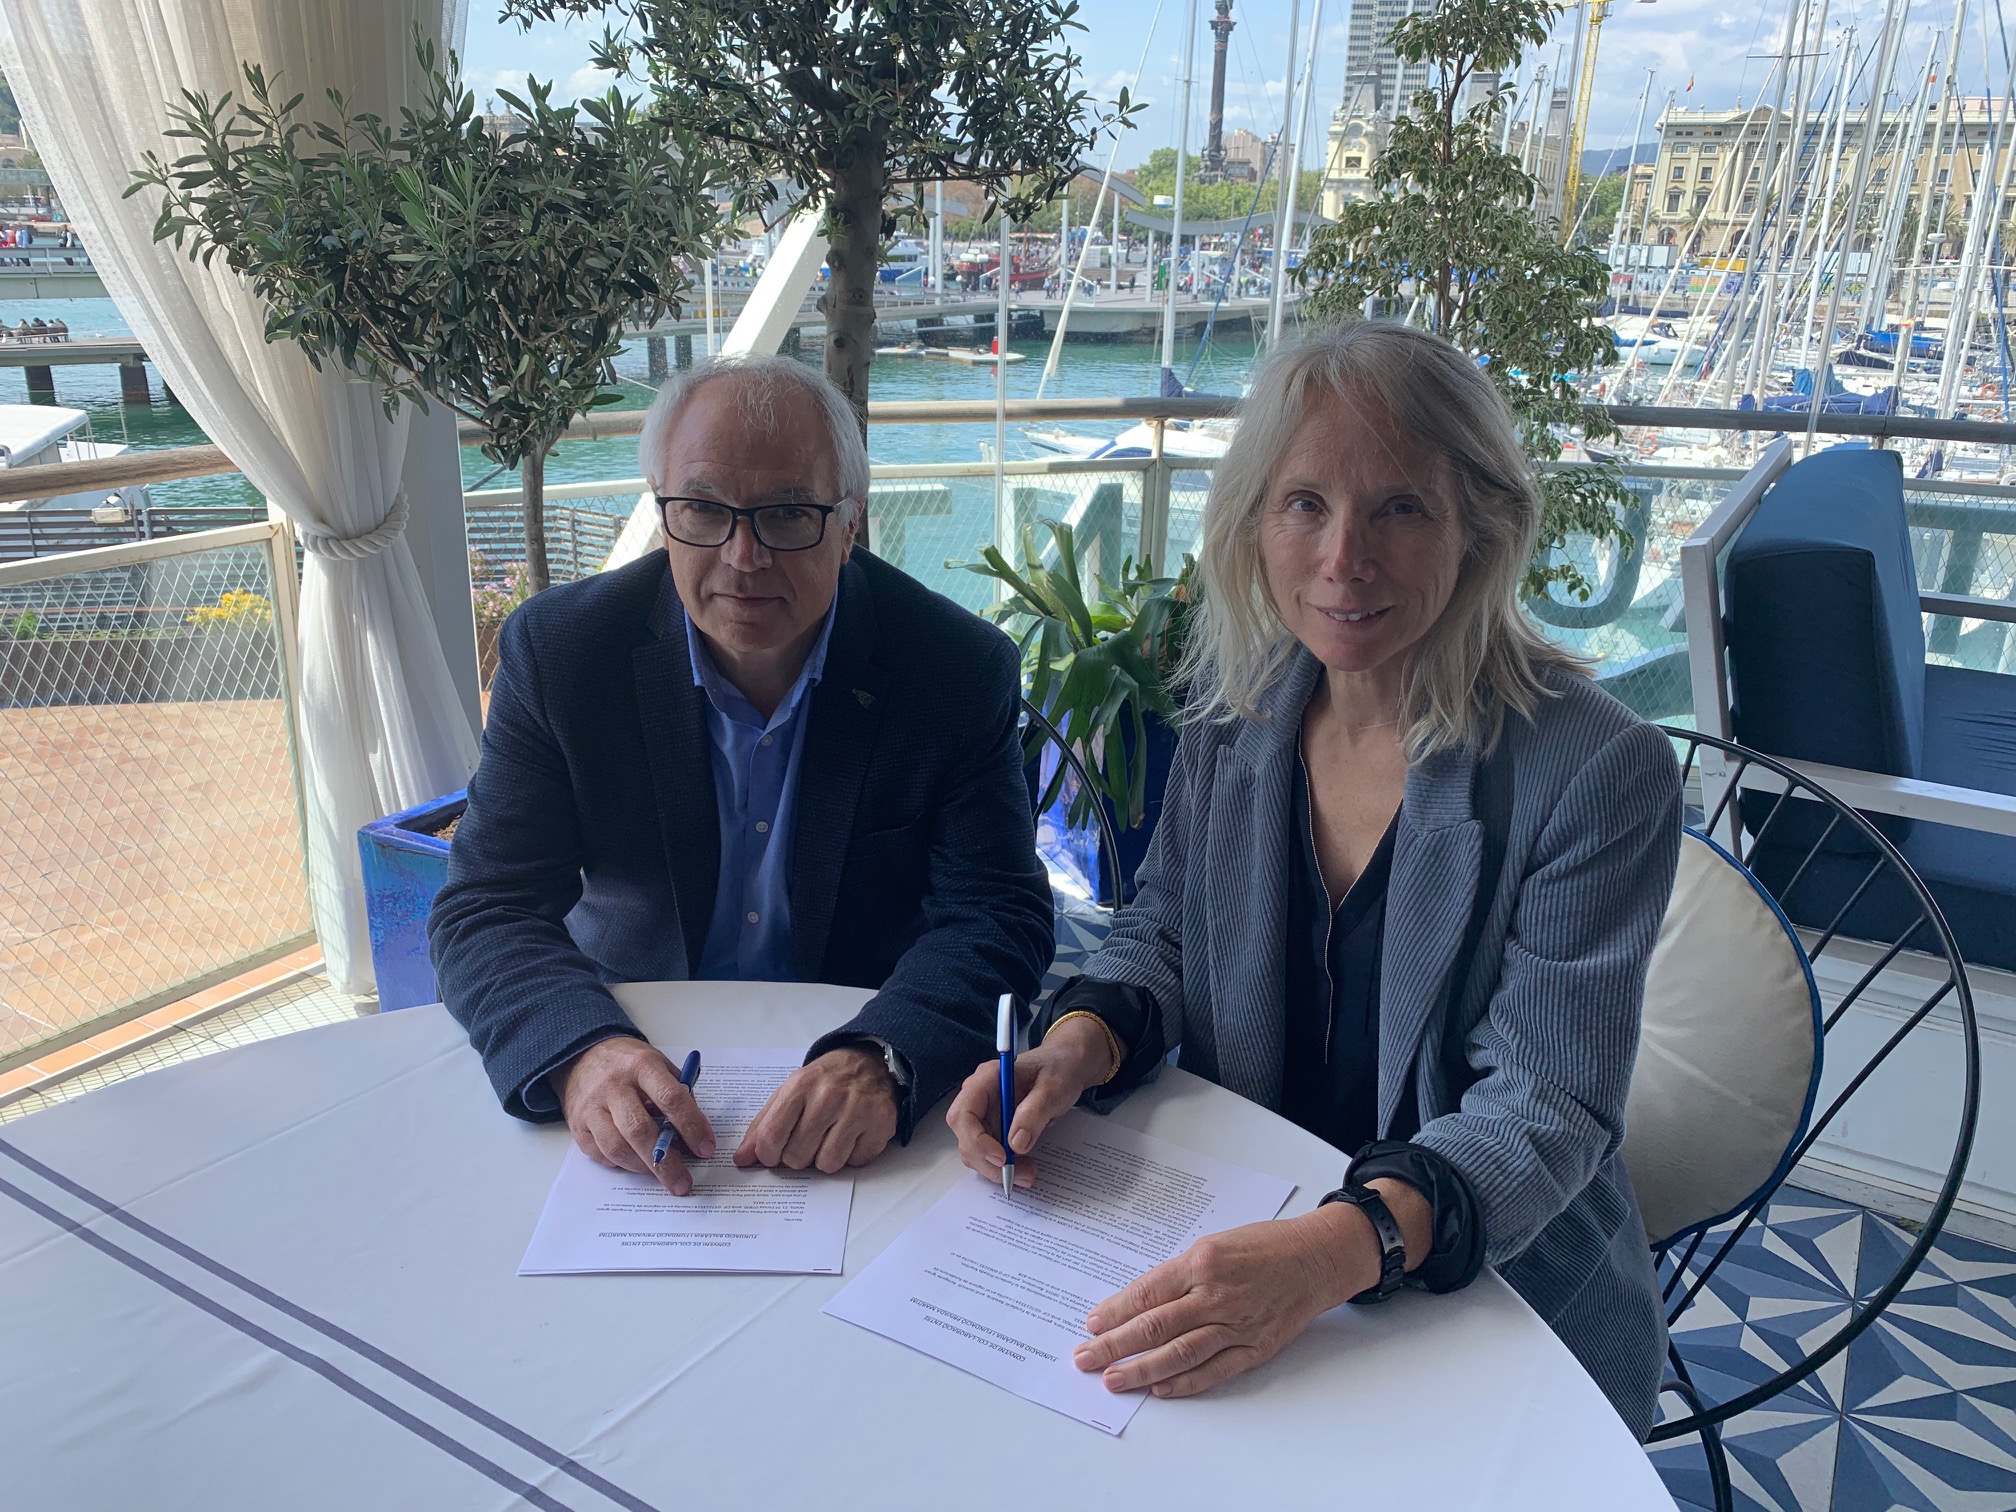 La Fundació Baleària y la Fundació Marítim firman un convenio para promocionar el remo en el Port Vell de Barcelona